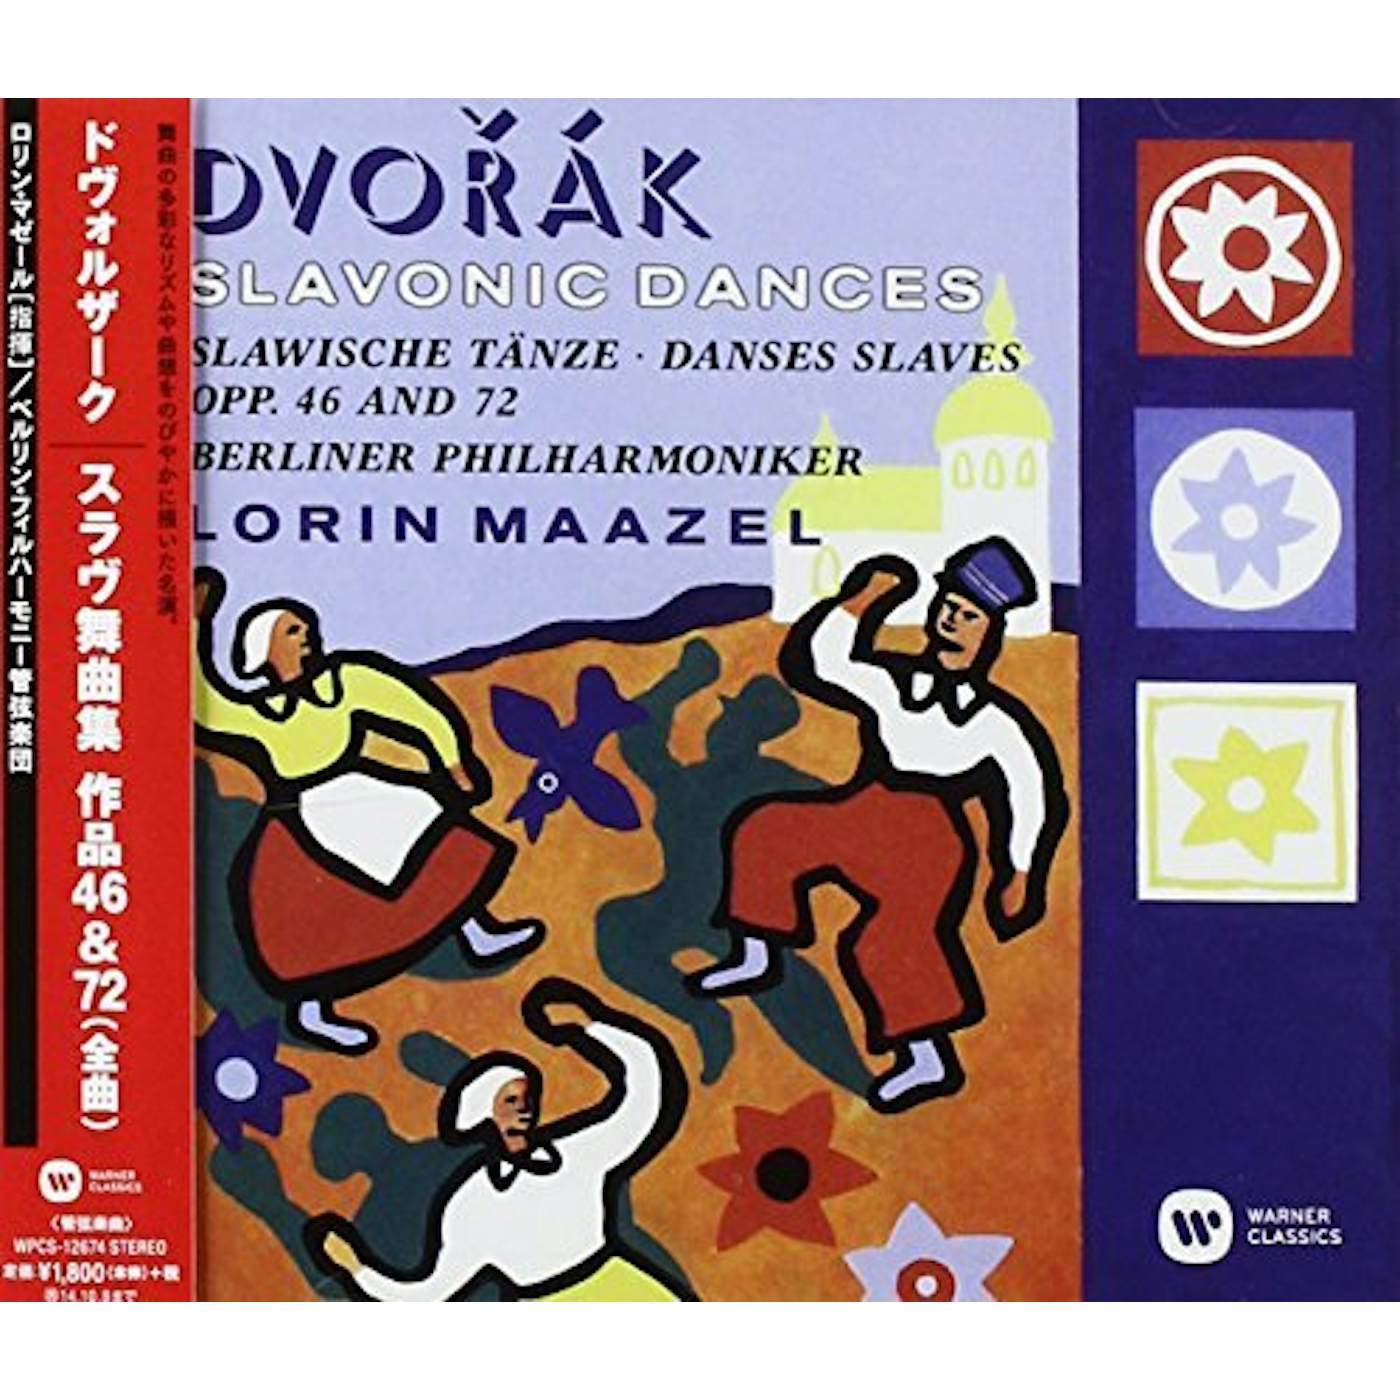 Lorin Maazel DVORAK: SLAVONIC DANCES OPP. 46 & 72 CD